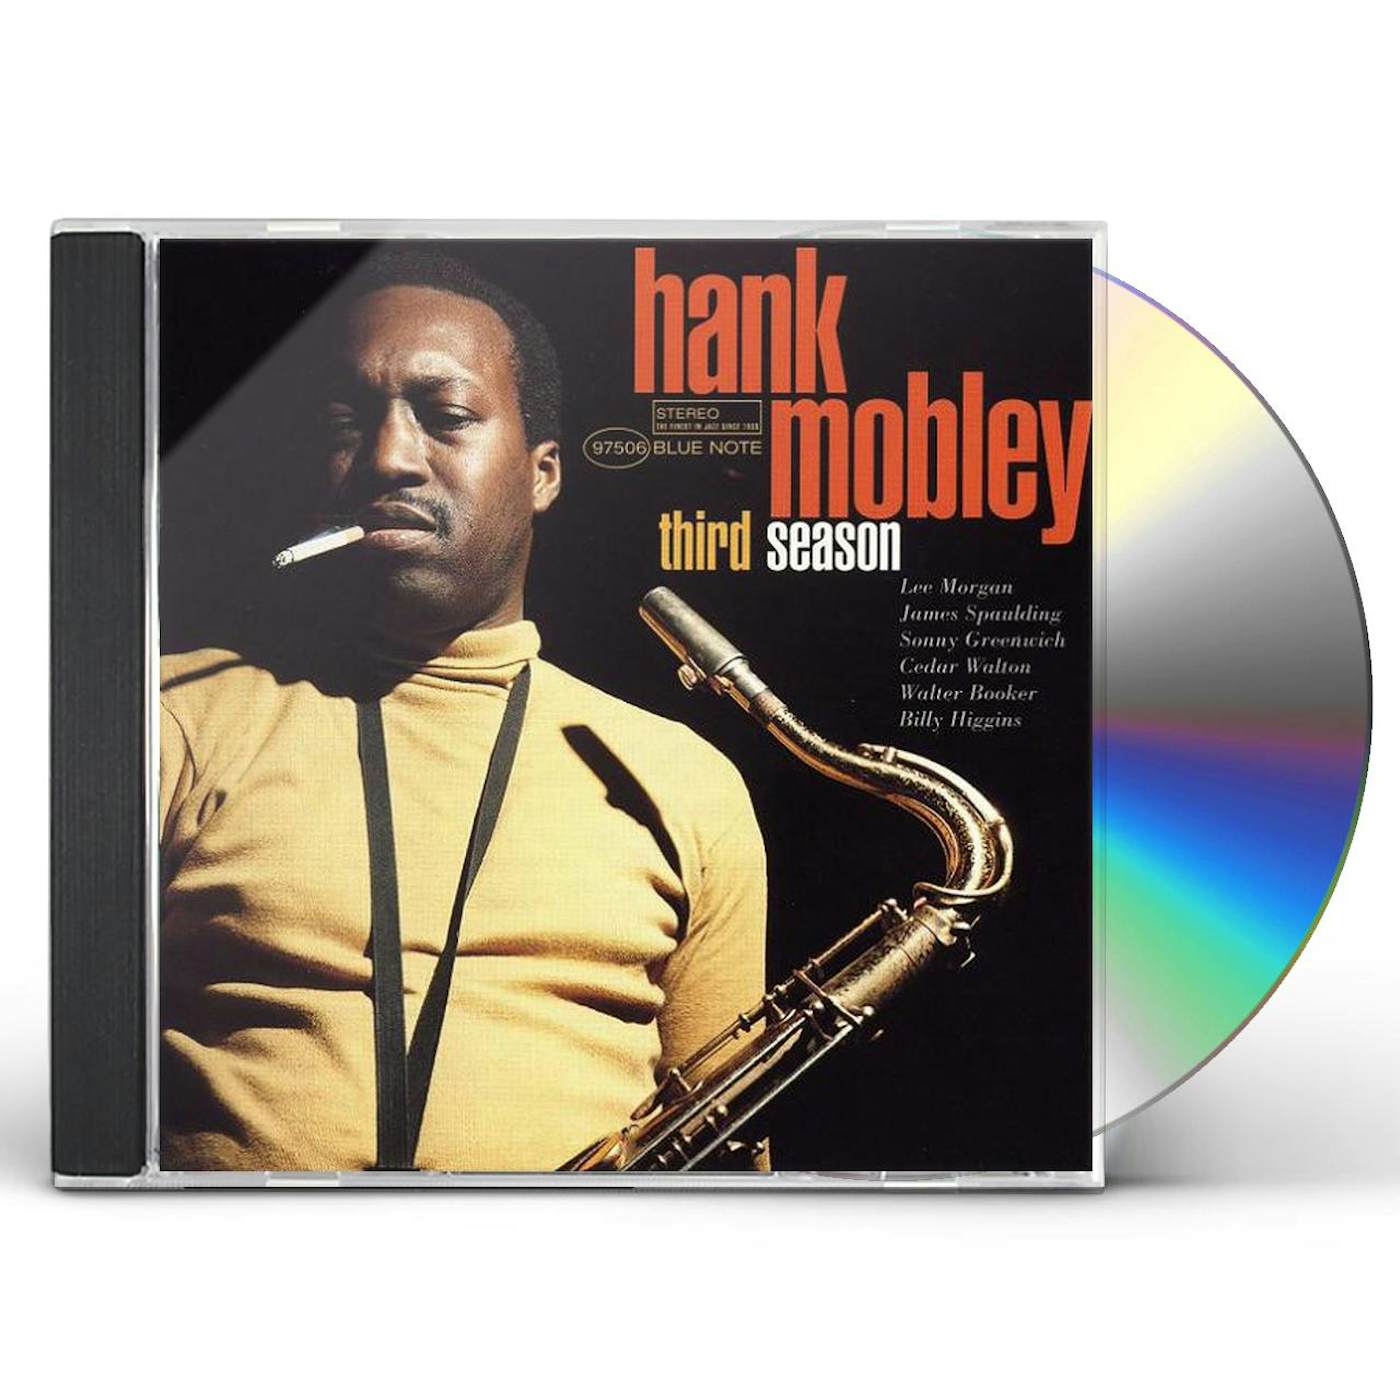 Hank Mobley THIRD CD